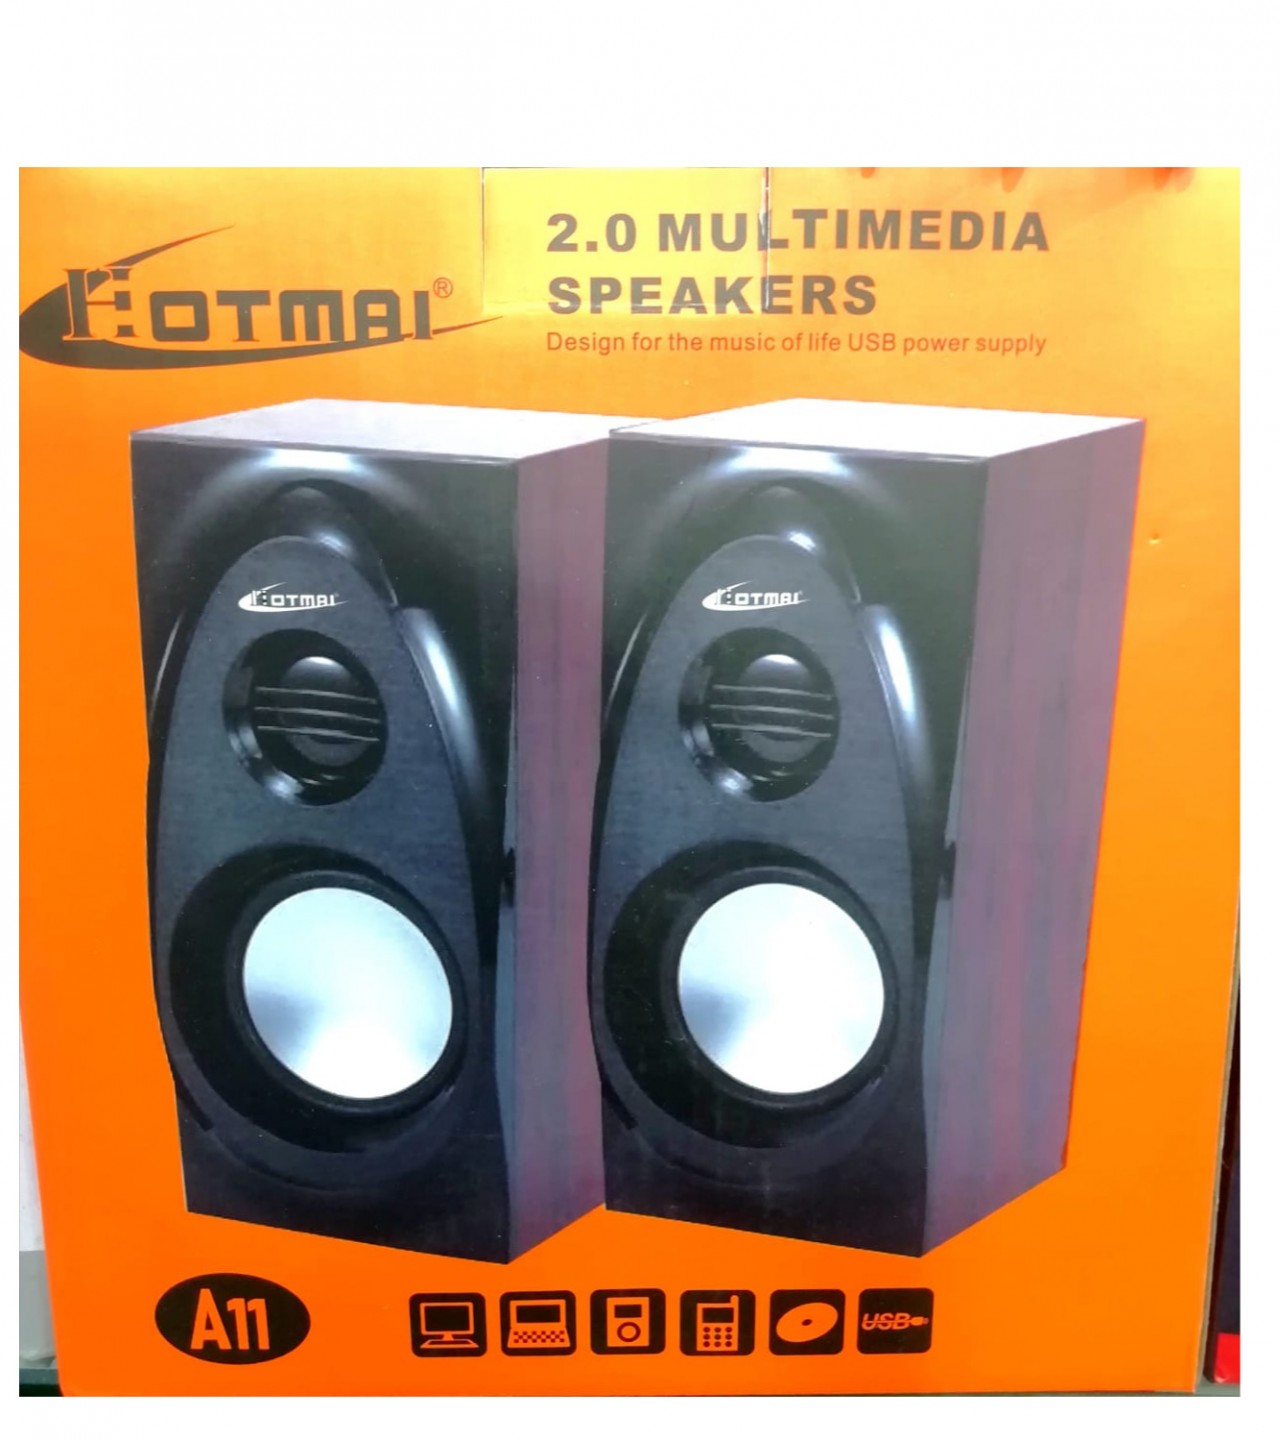 Eotmai 2.0 MultiMedia Speakers